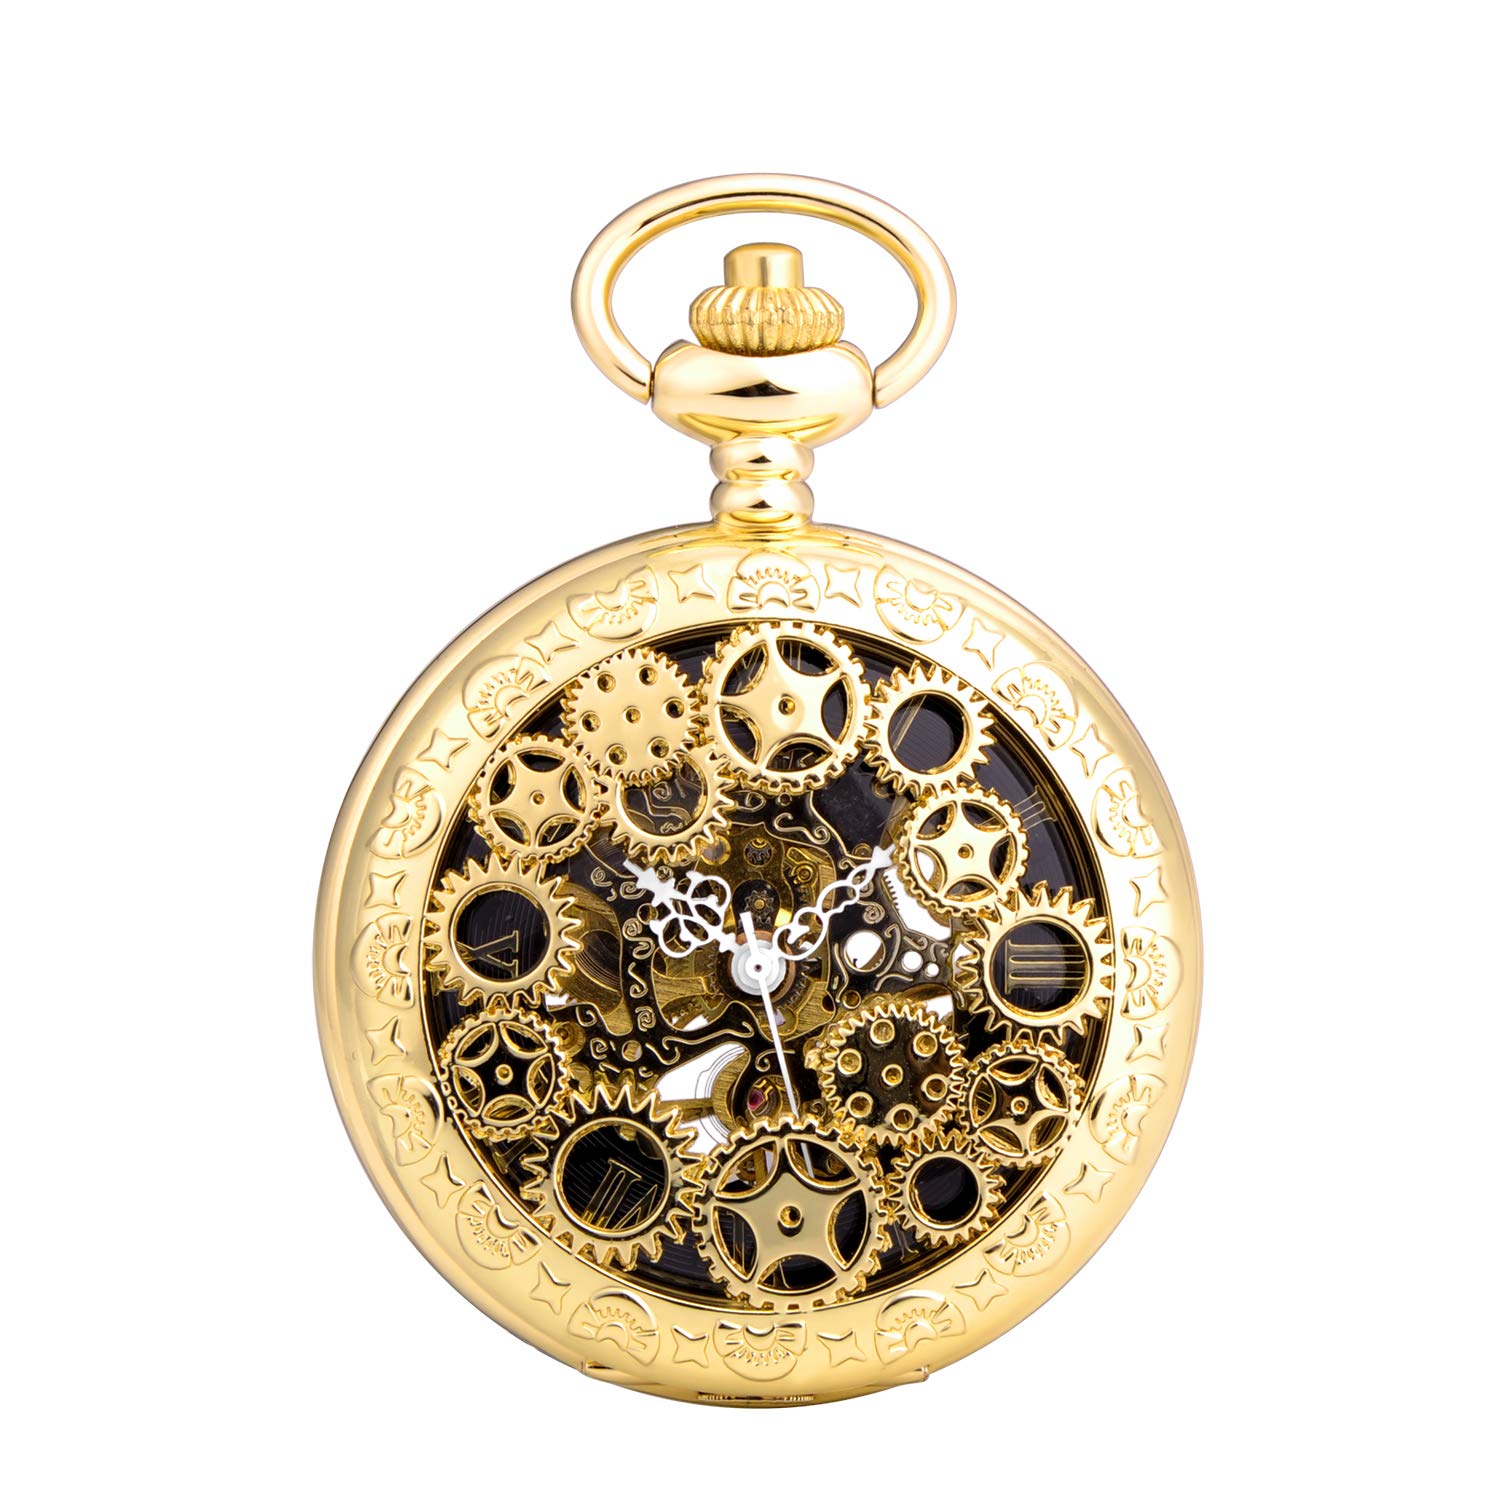 Unendlich U Men's Mechanical Pocket Watch, Vintage Pocket Watch, Steampunk Gears Series Skeleton Roman Numerals Dial Black Stainless Steel Case for Men Women